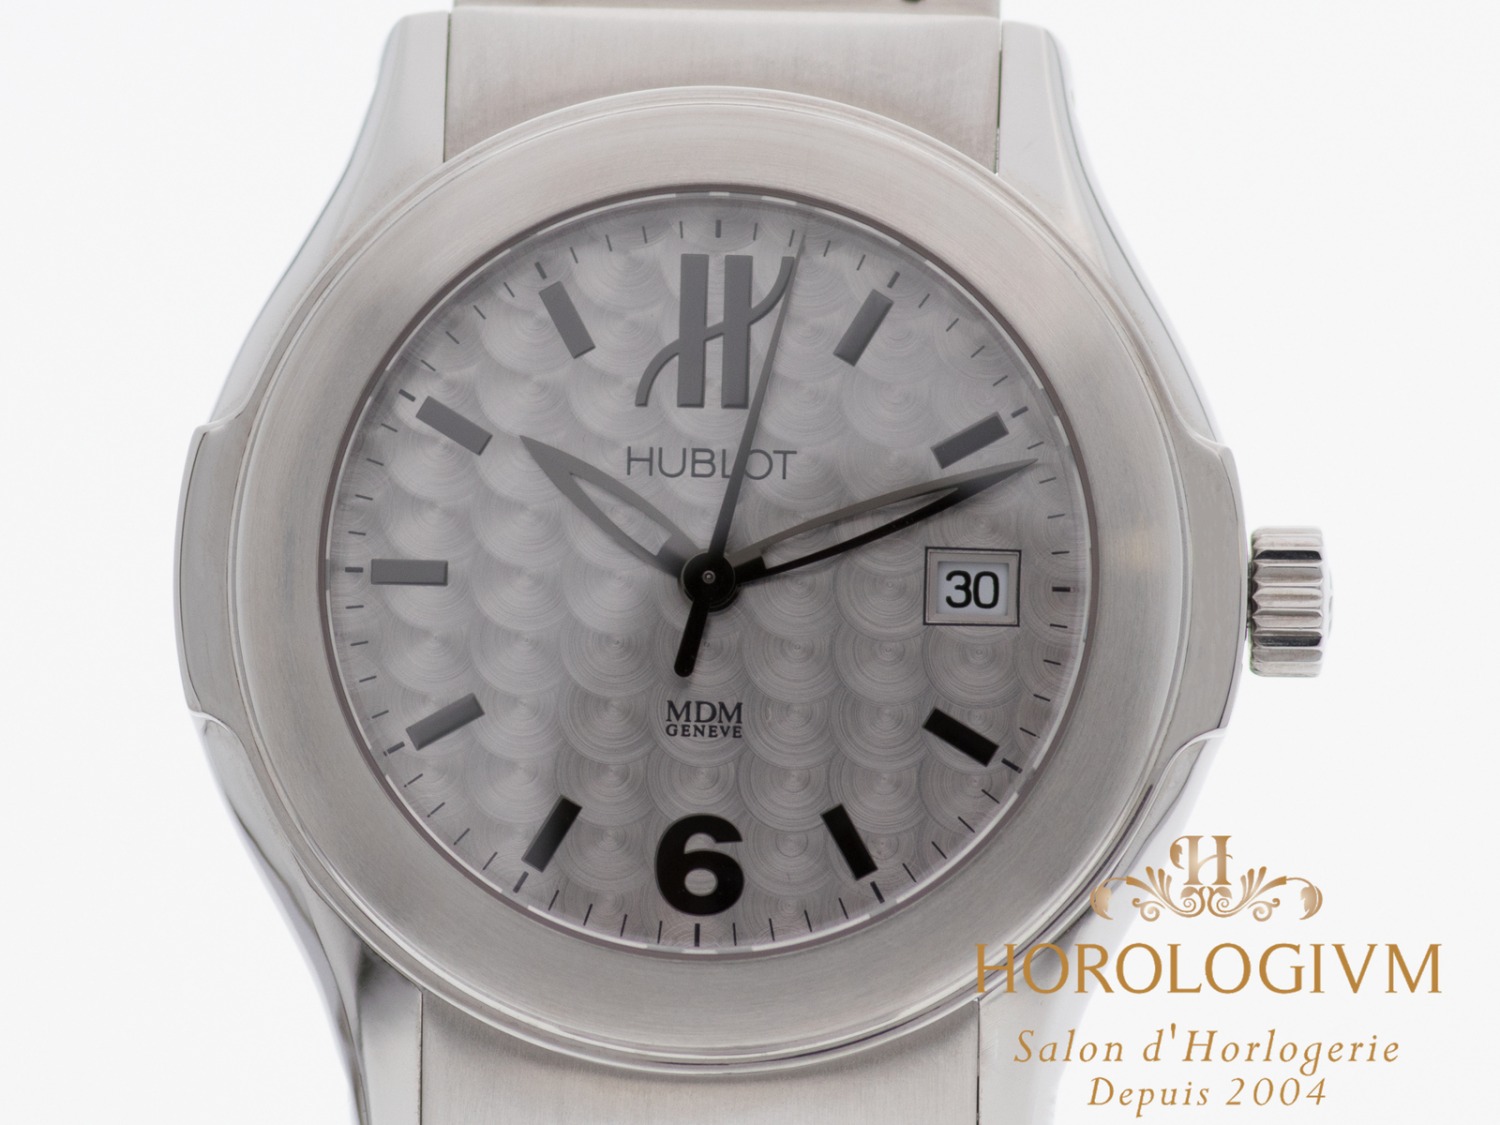 Hublot Classic MDM 42 MM Ref. 1910.1 watch, silver